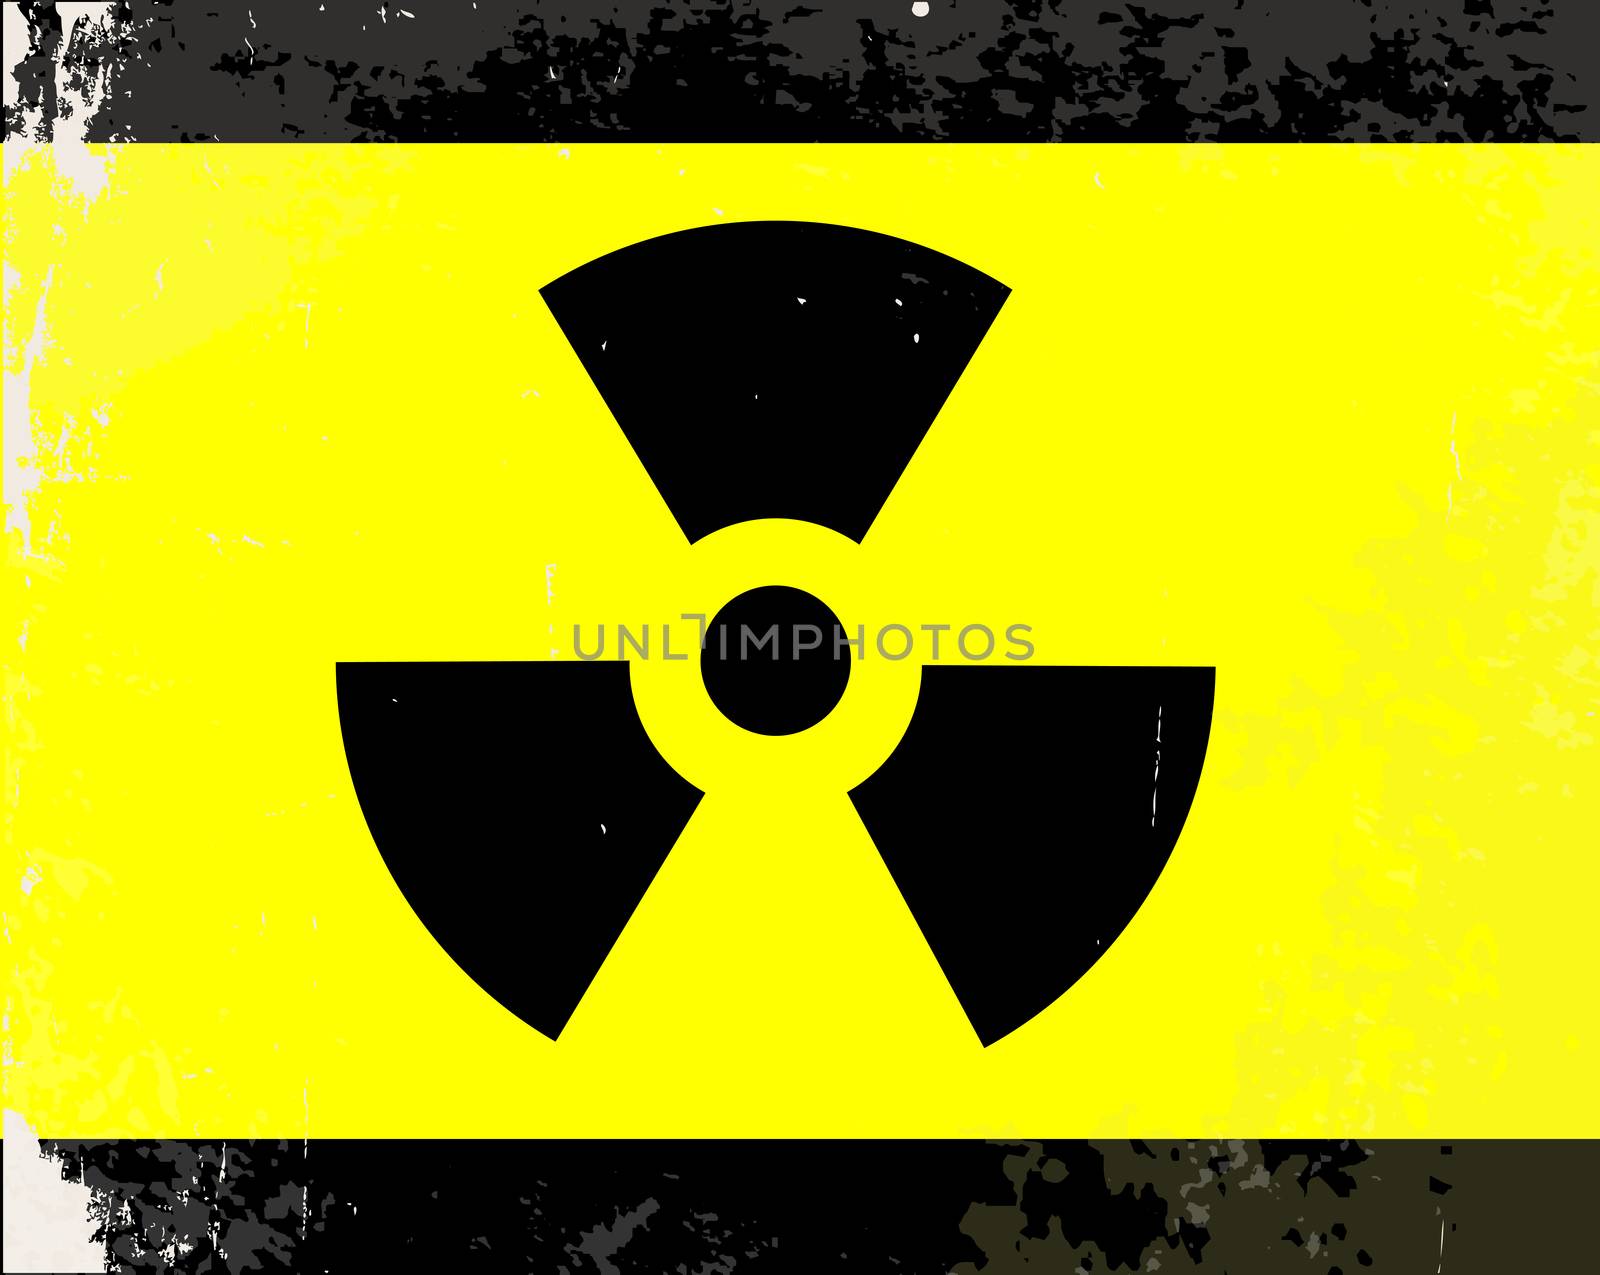 Worn Radioactive Warning Symbol by Bigalbaloo